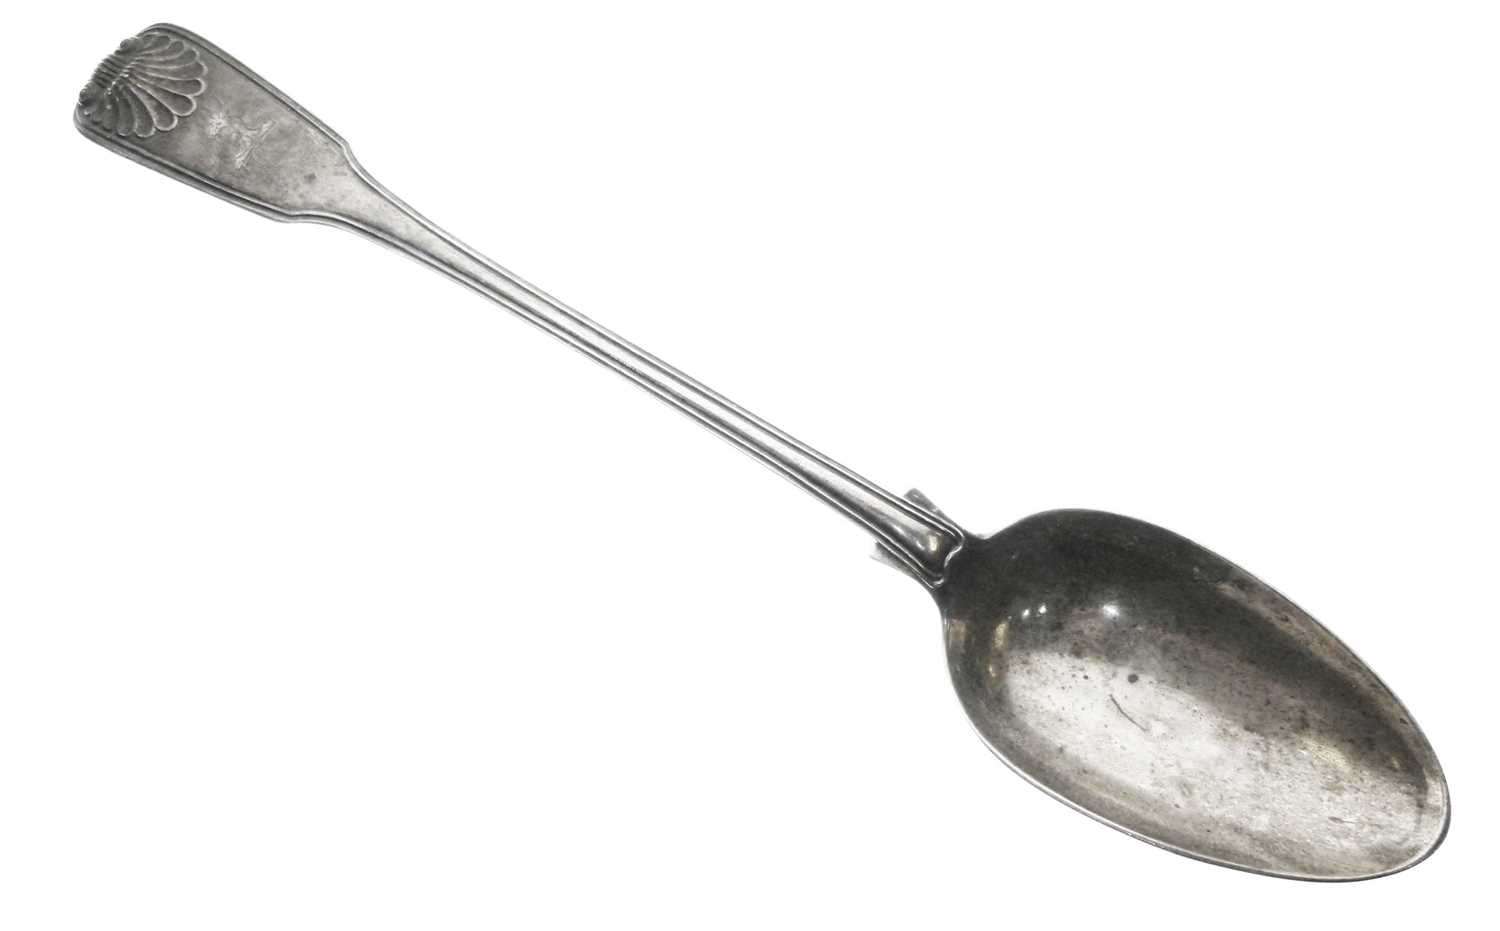 Lot 78 - Georgian silver Queen's pattern serving/basting spoon